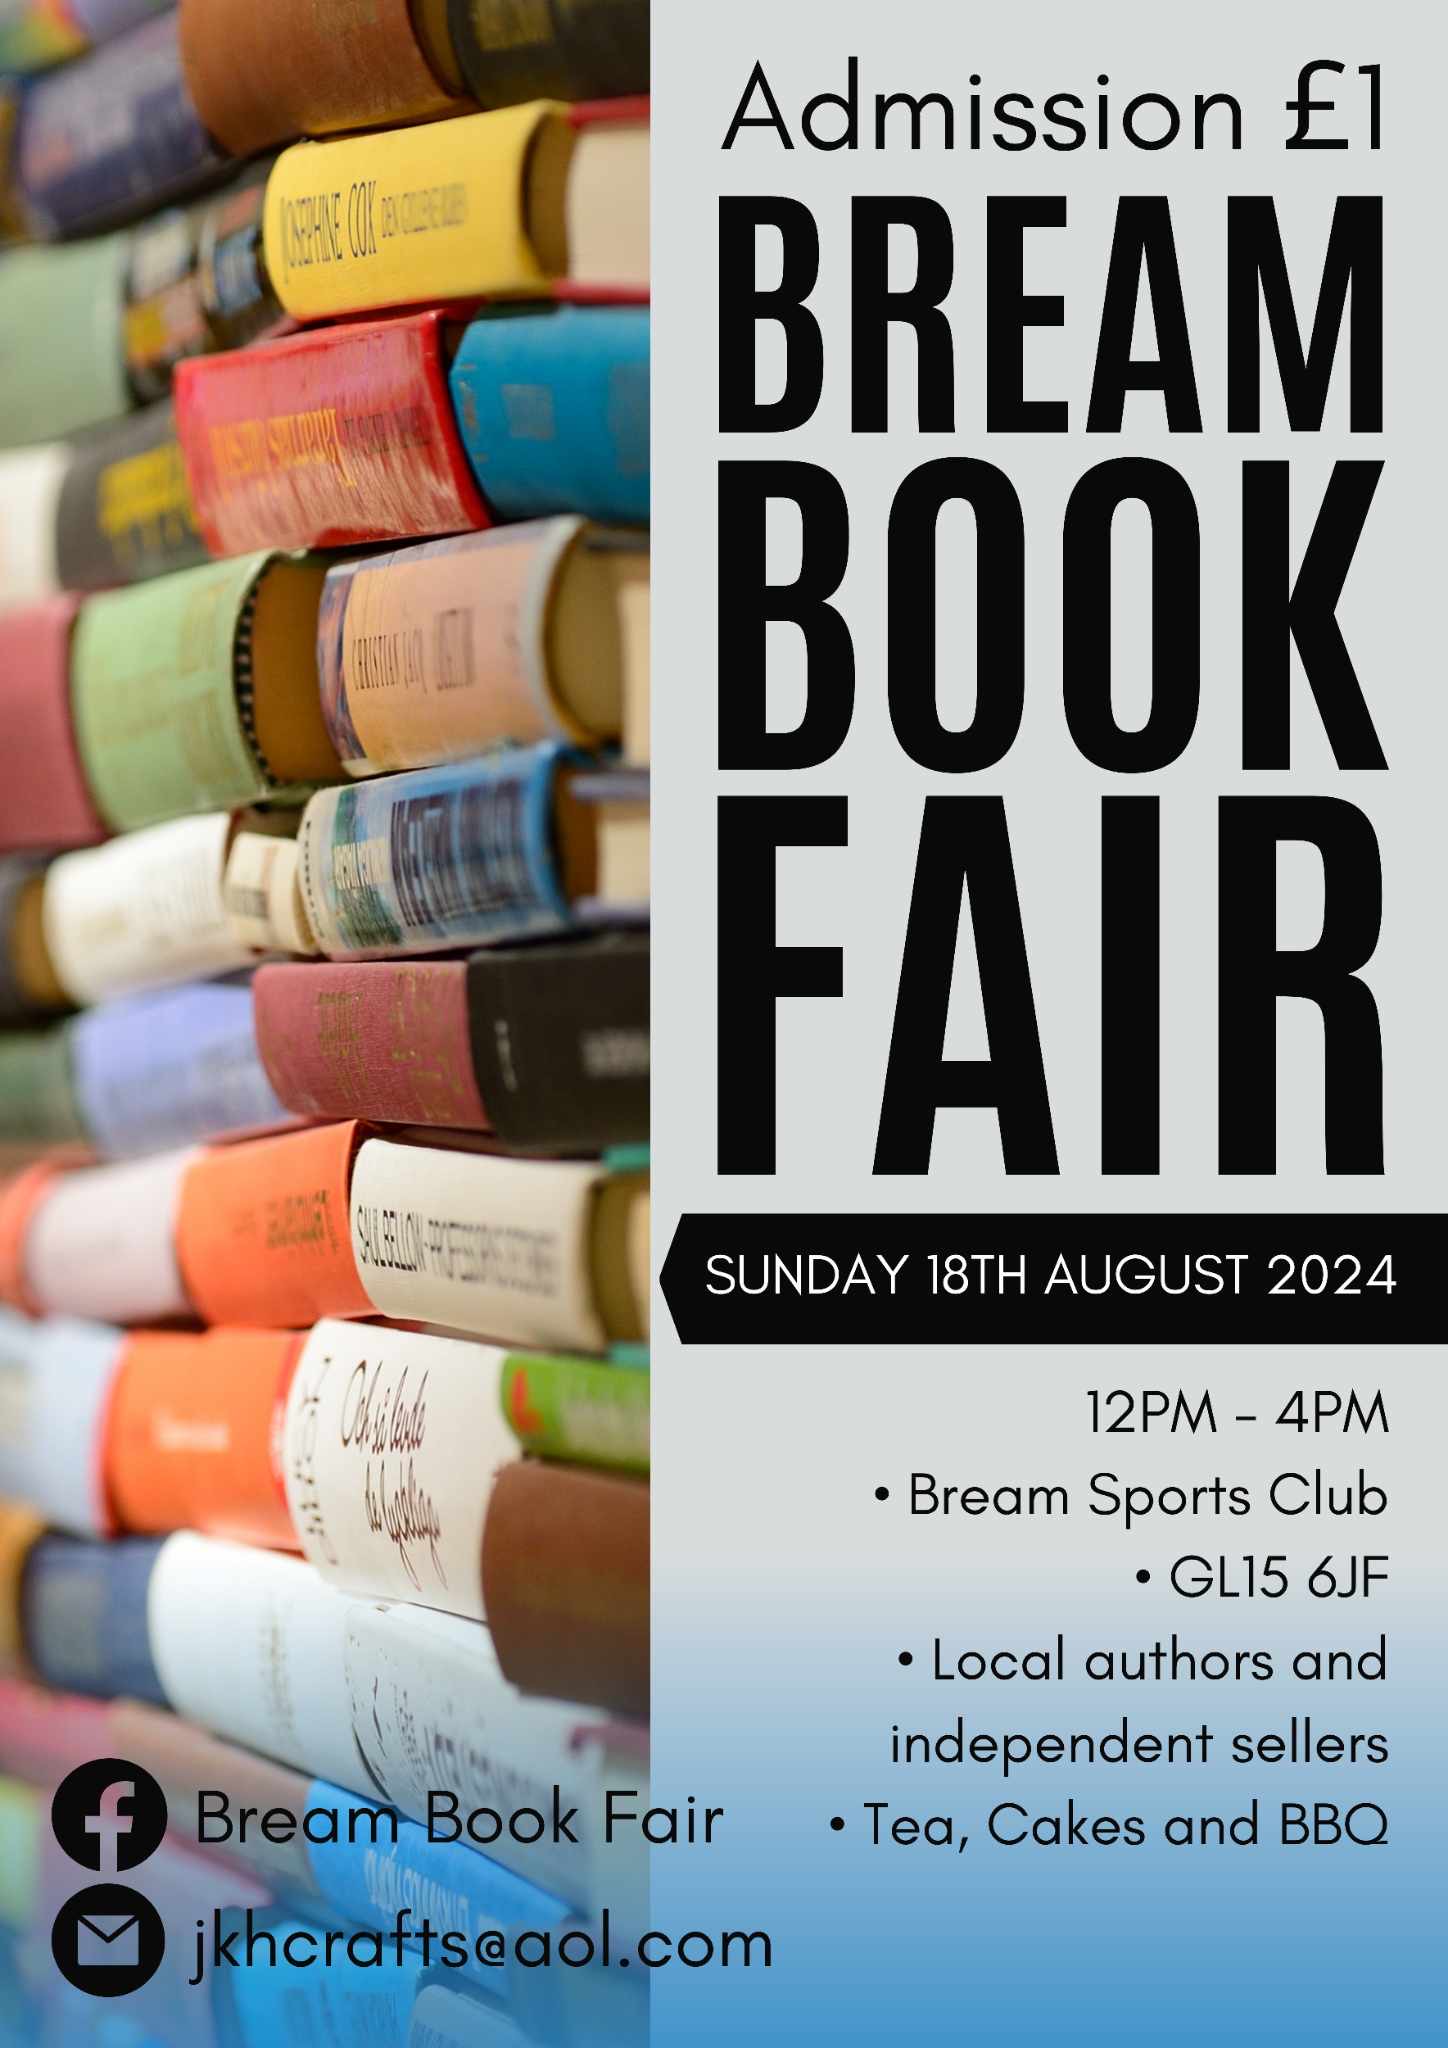 An image for the 2024 bream Book Fair